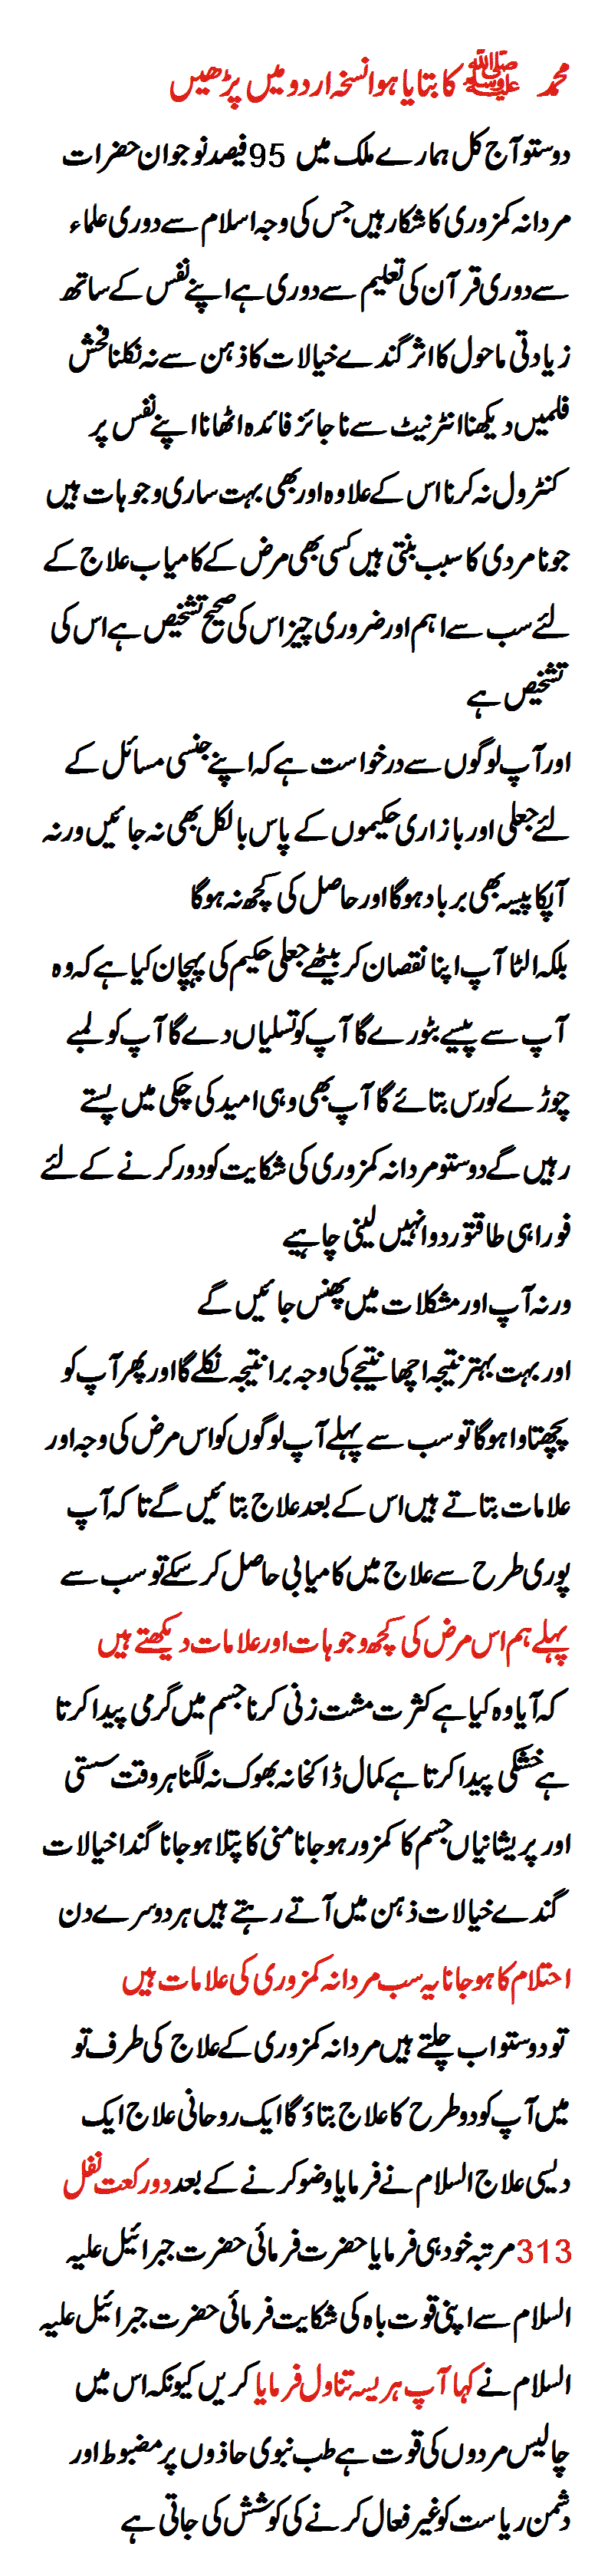 Read the narration of Muhammad in Urdu 